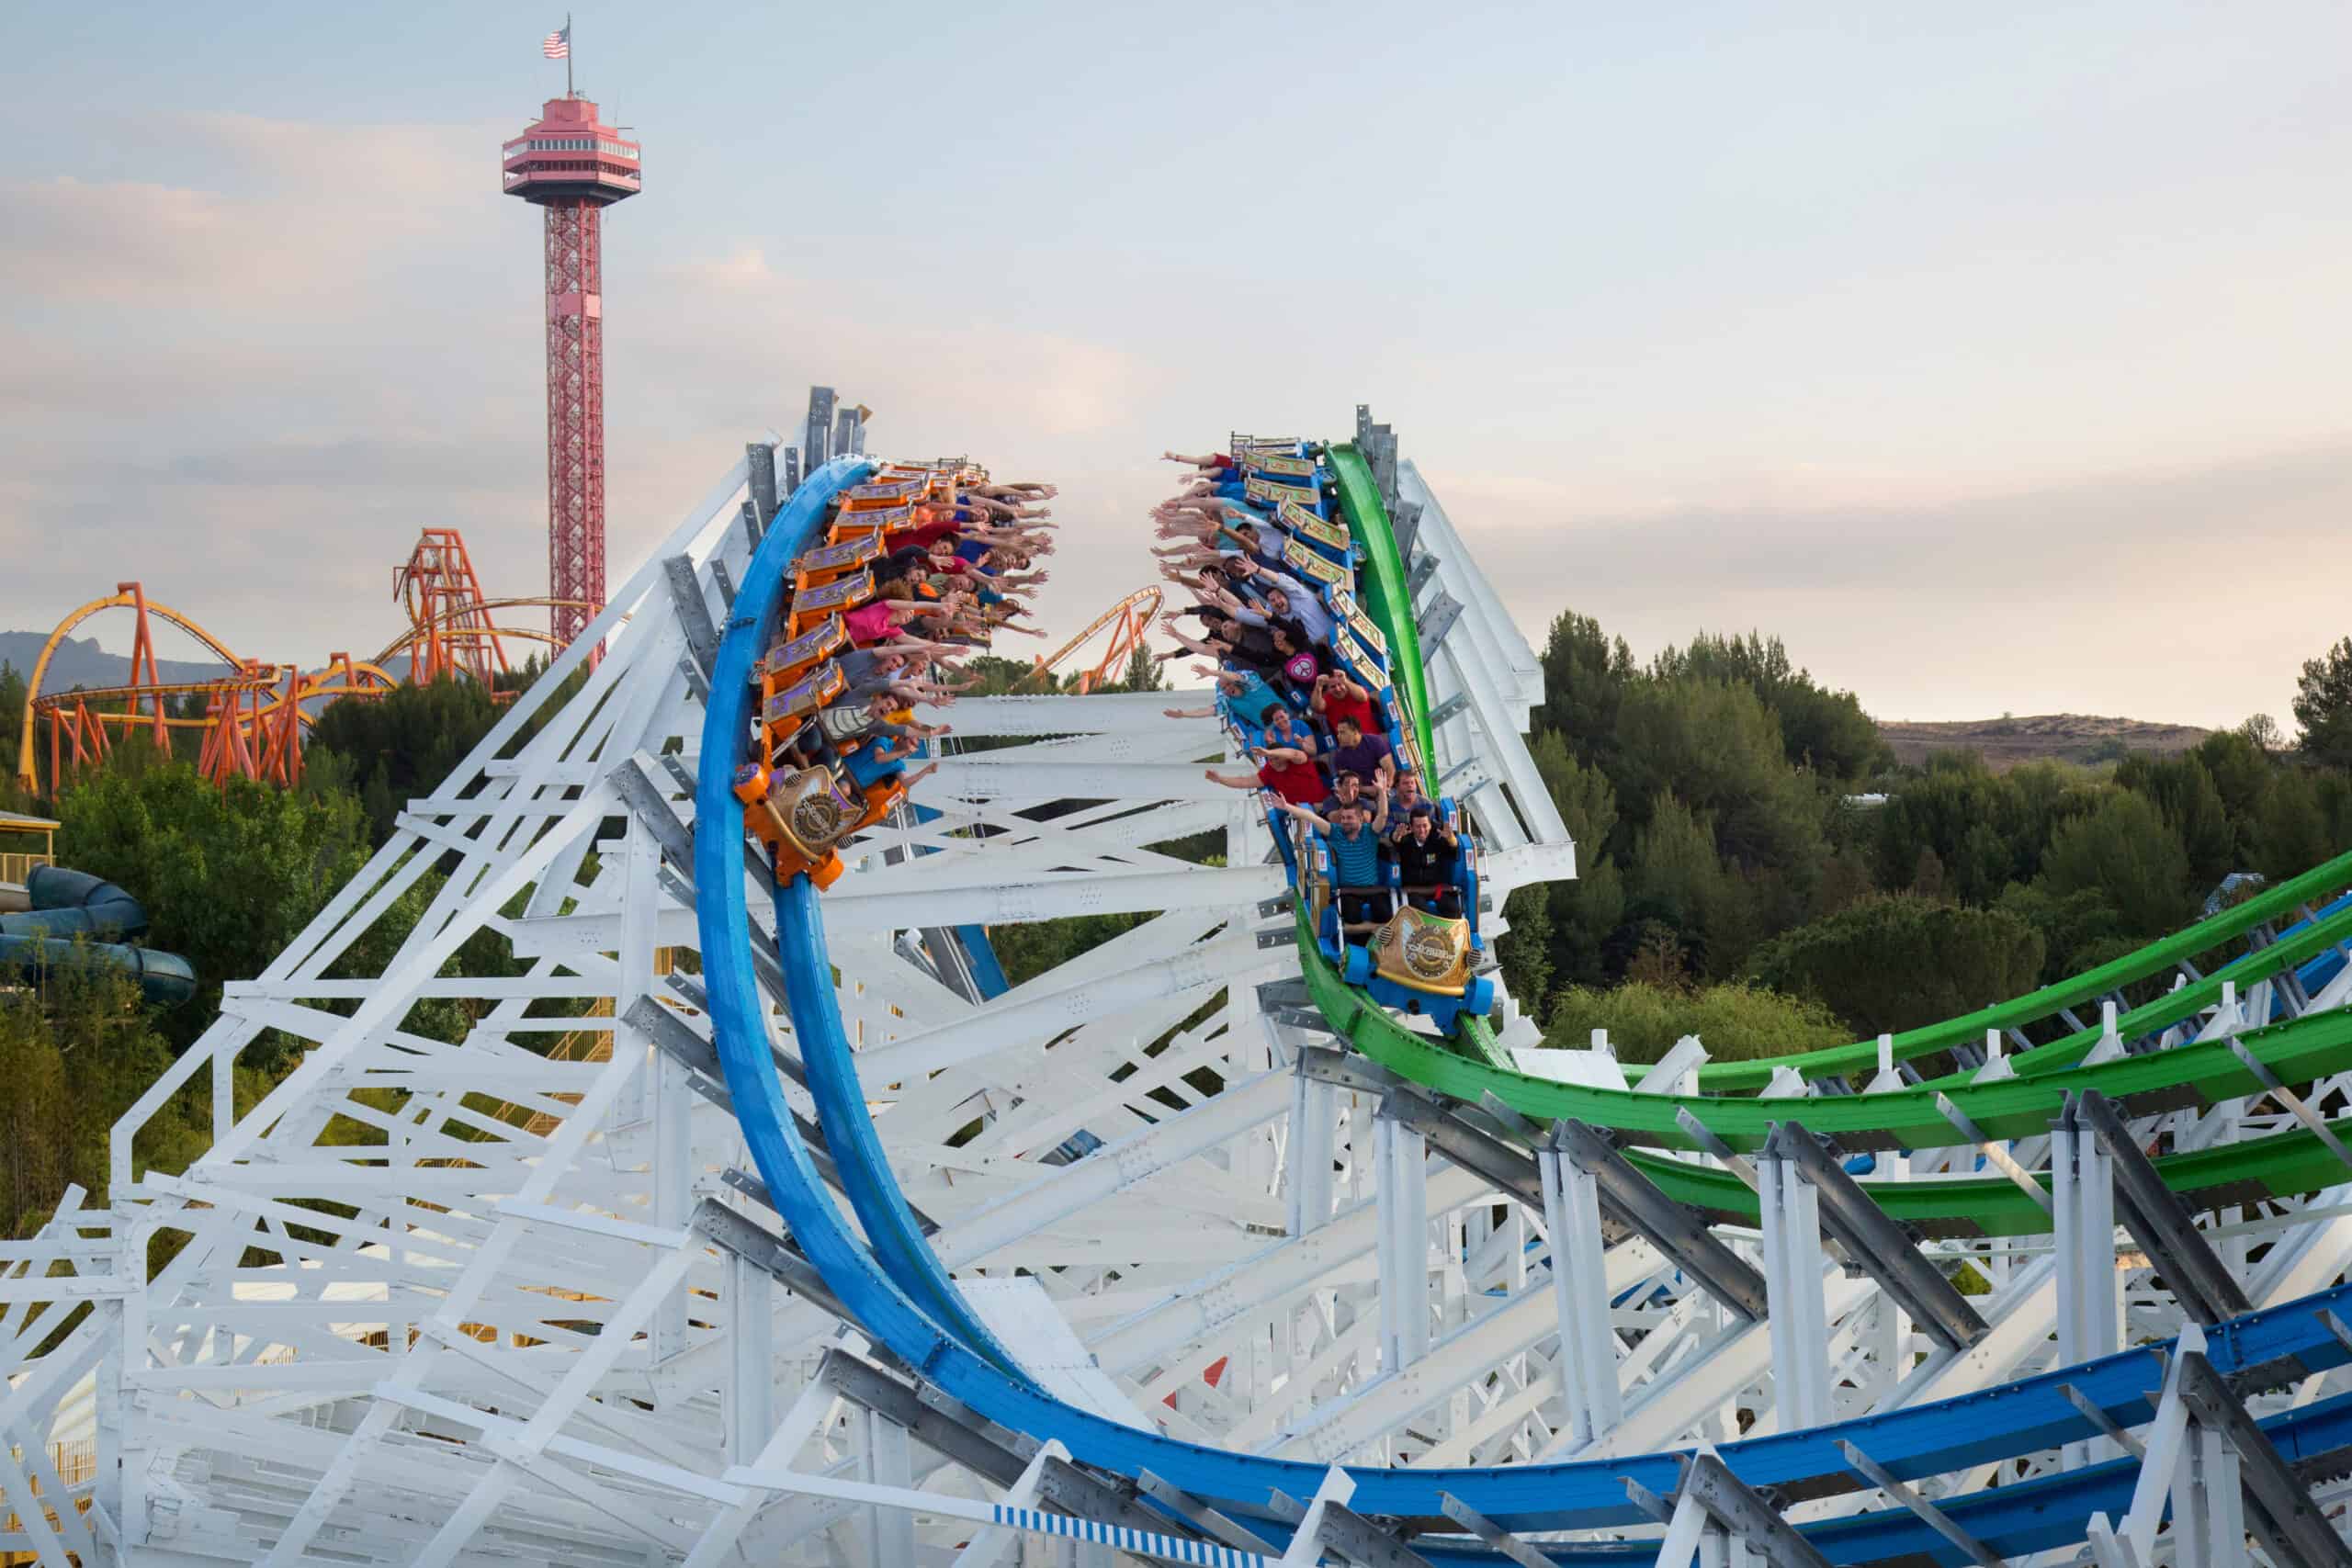 Best things to do in Santa Clarita California - Logan Allec - Six Flags Magic Mountain Twisted Colossus